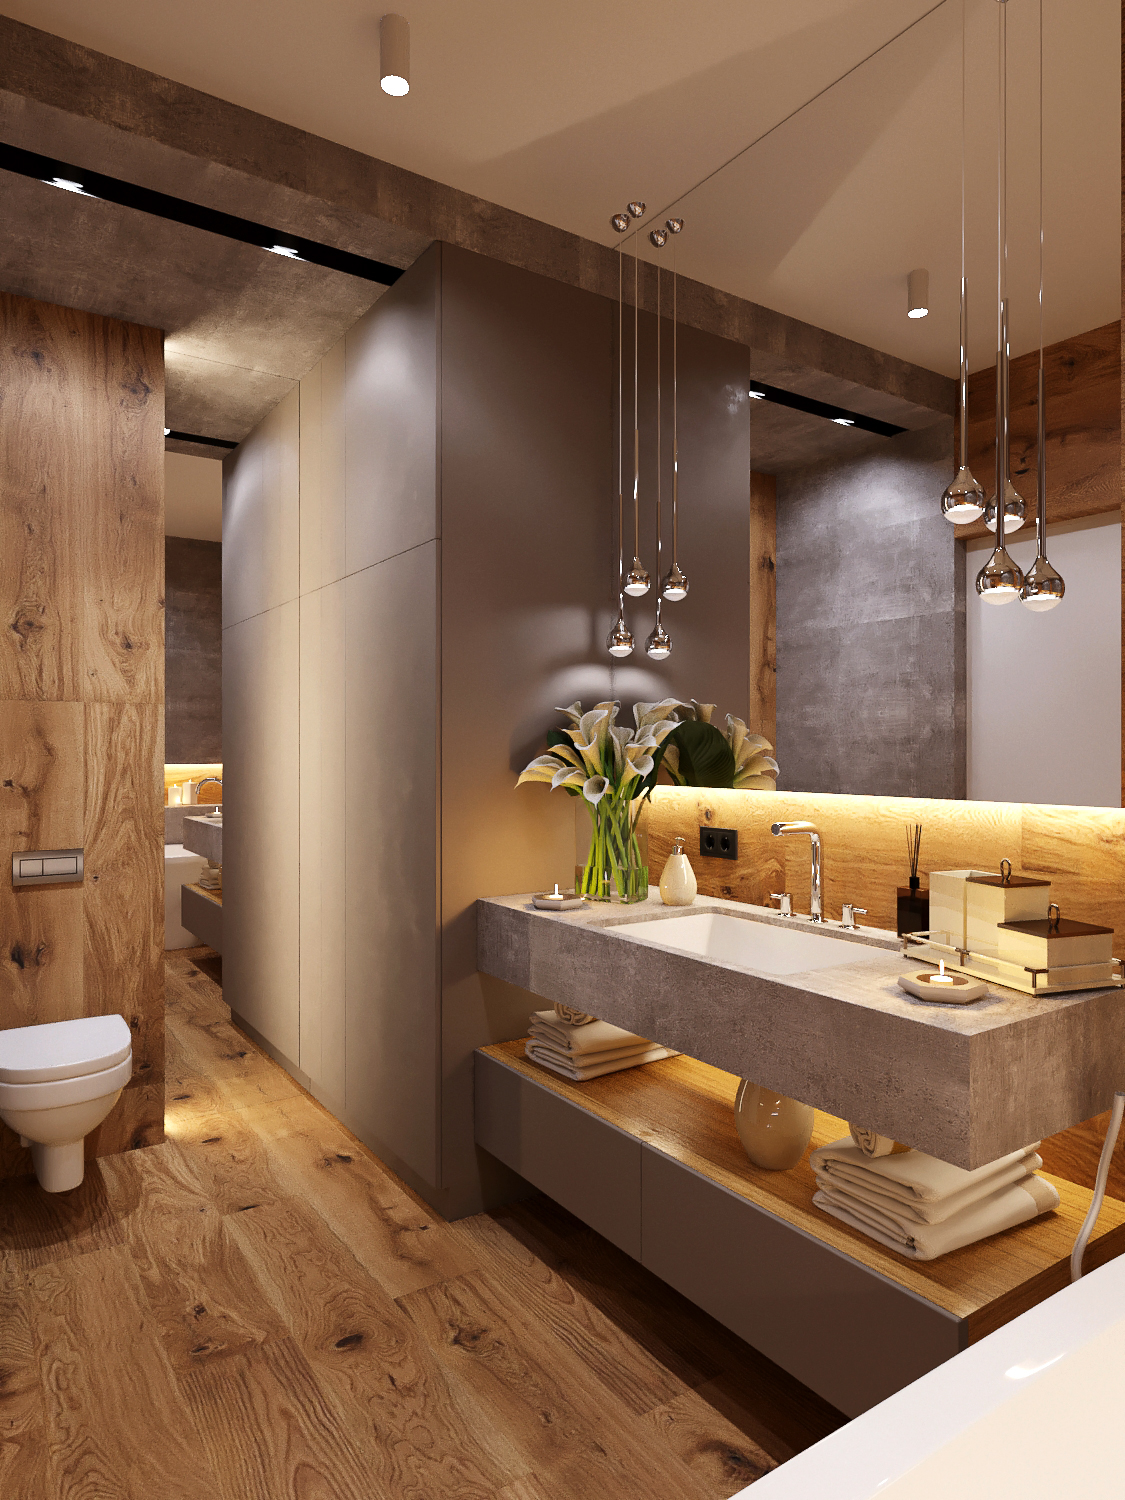 Bathroom interior design Kiev on Behance